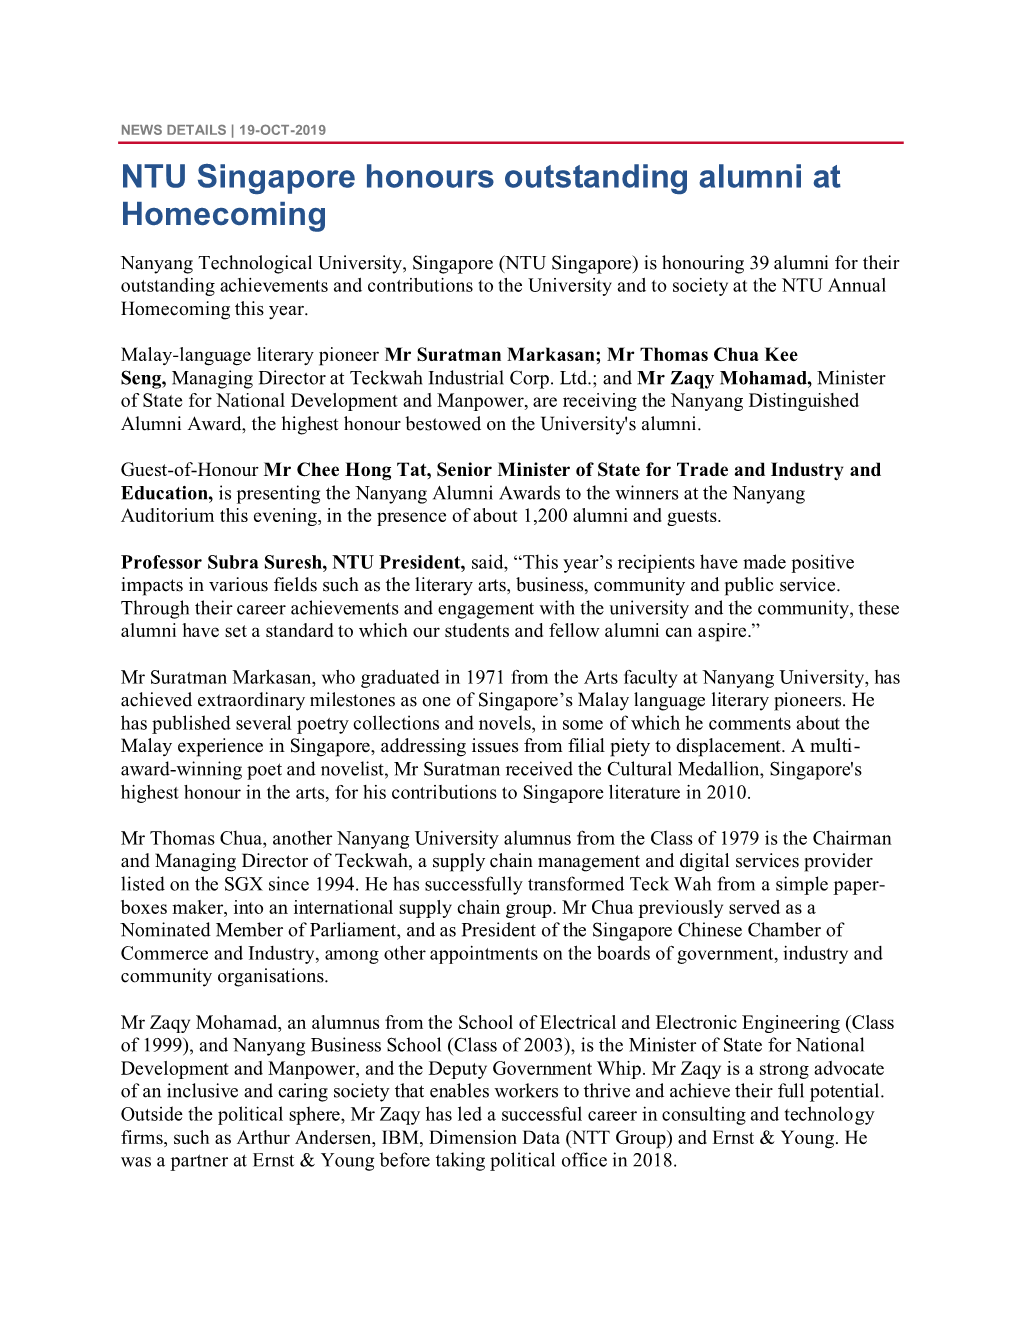 NTU Singapore Honours Outstanding Alumni at Homecoming